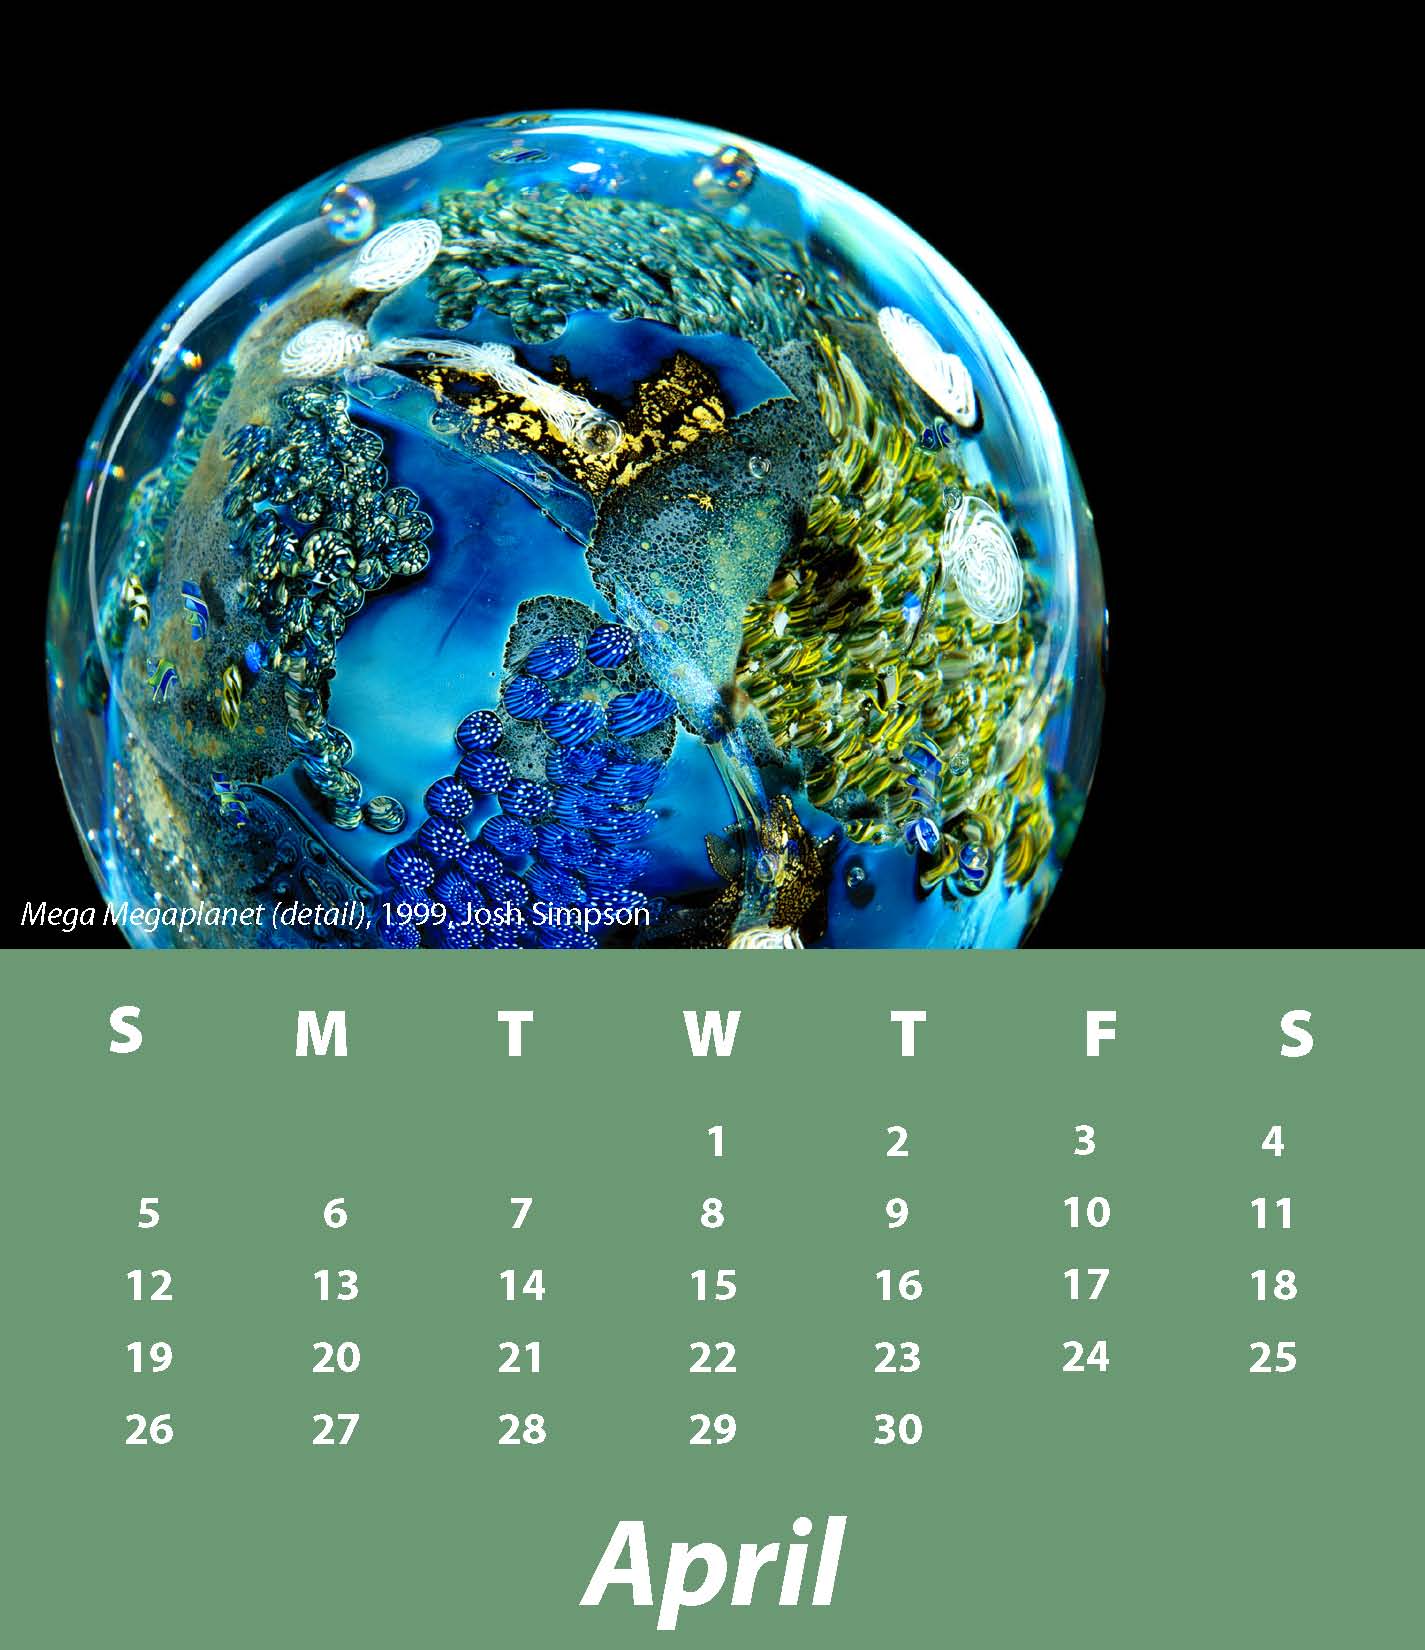 an April calendar with the image Mega Megaplanet